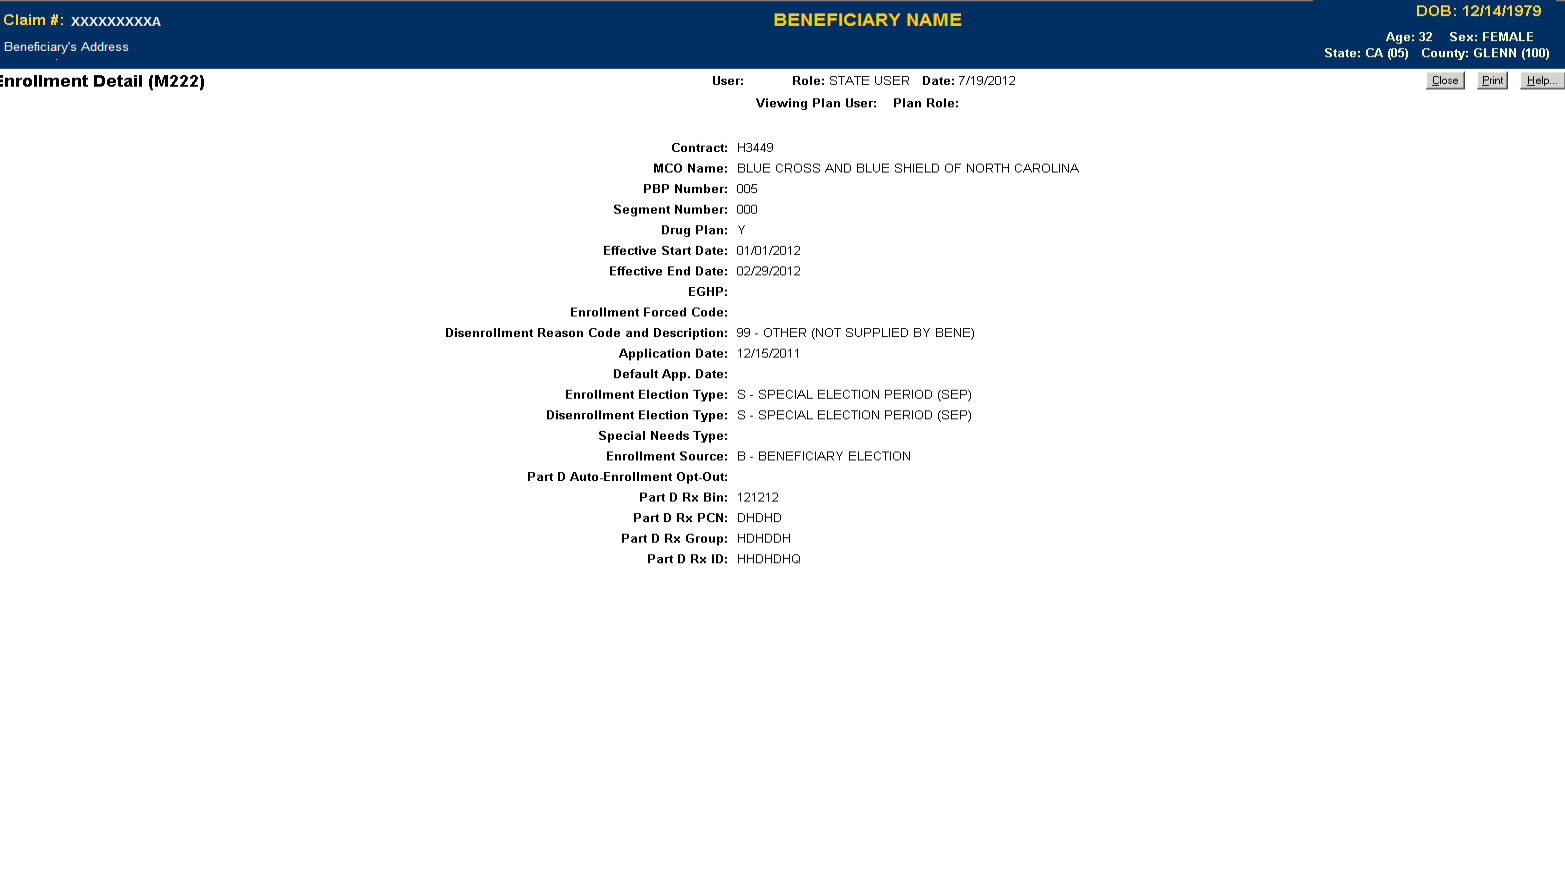 State User Detail: Enrollment (M222) Screen 